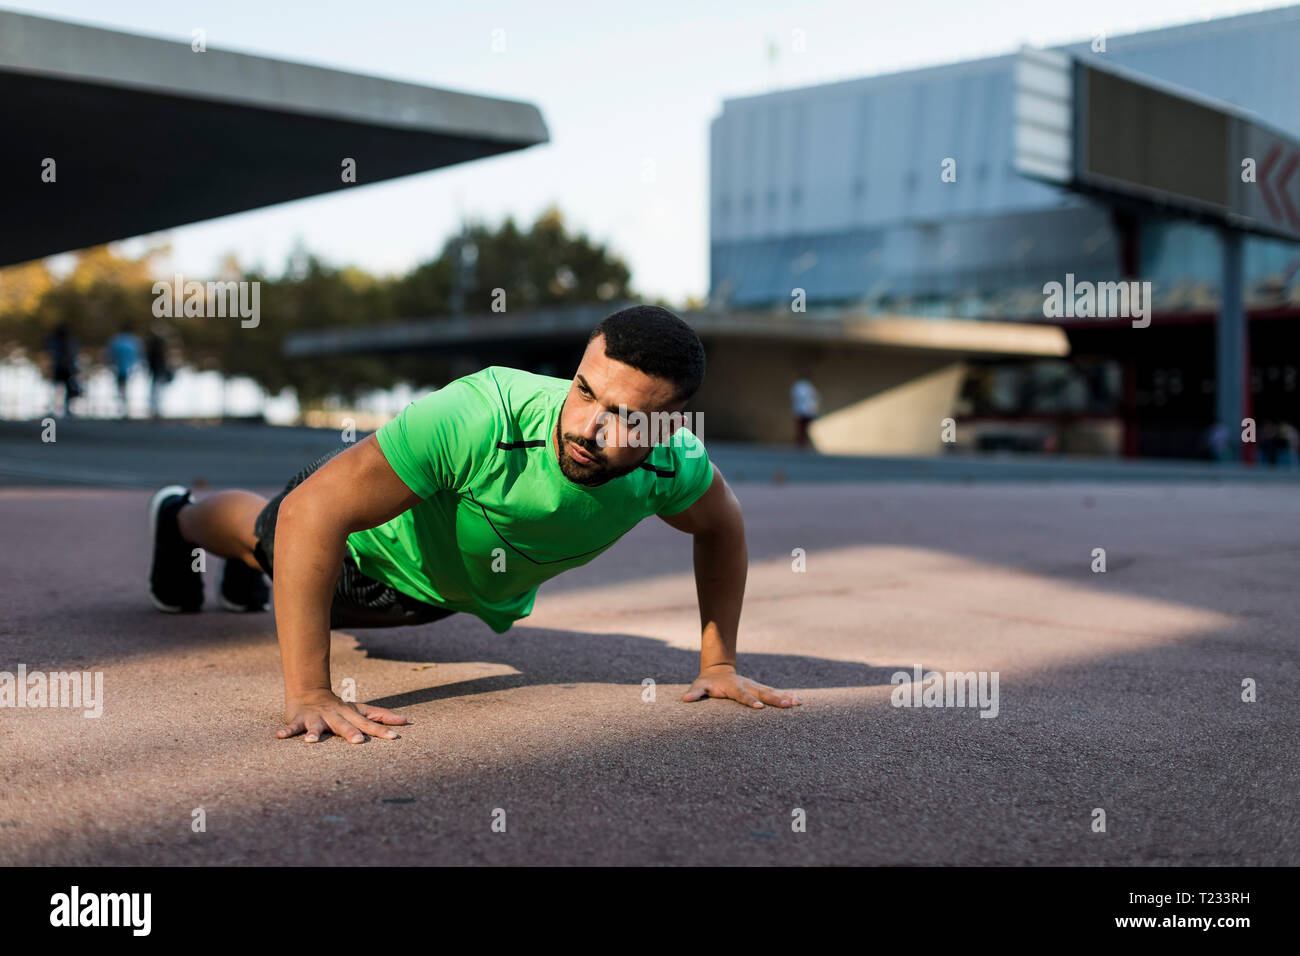 Sportive man during workout, pushup Stock Photo